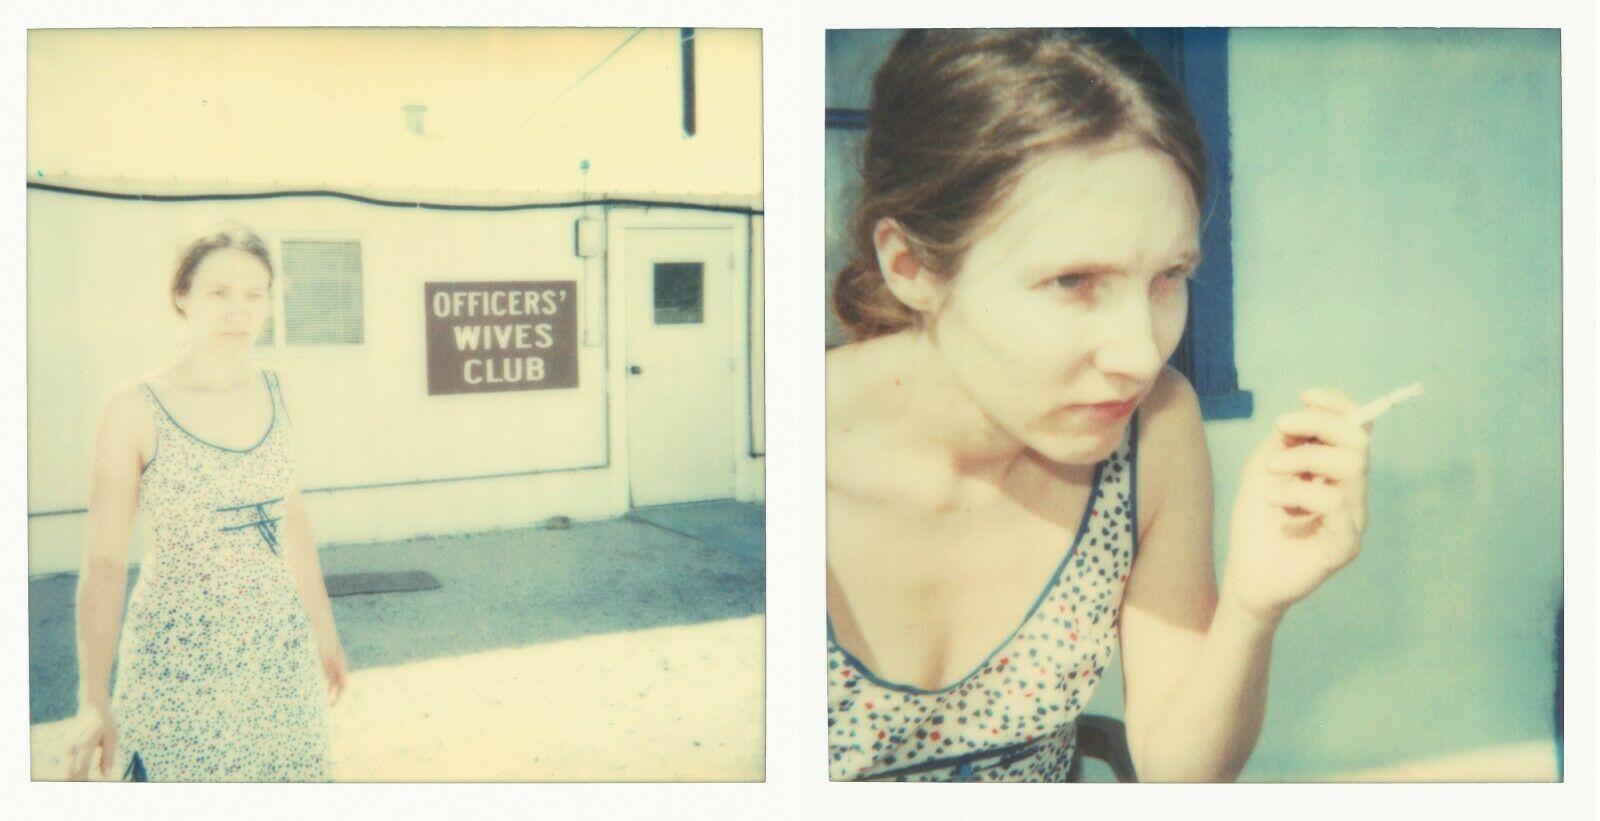 Stefanie Schneider Color Photograph - Officer's Wives Club - Contemporary, 21st Century, Polaroid, Figurative